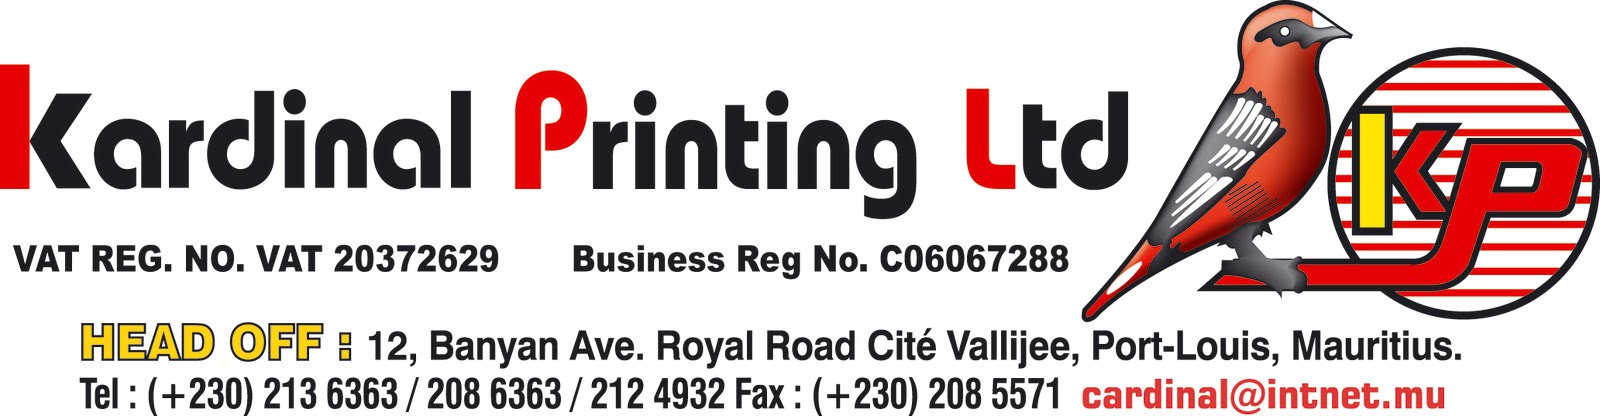 Kardinal Printing Ltd